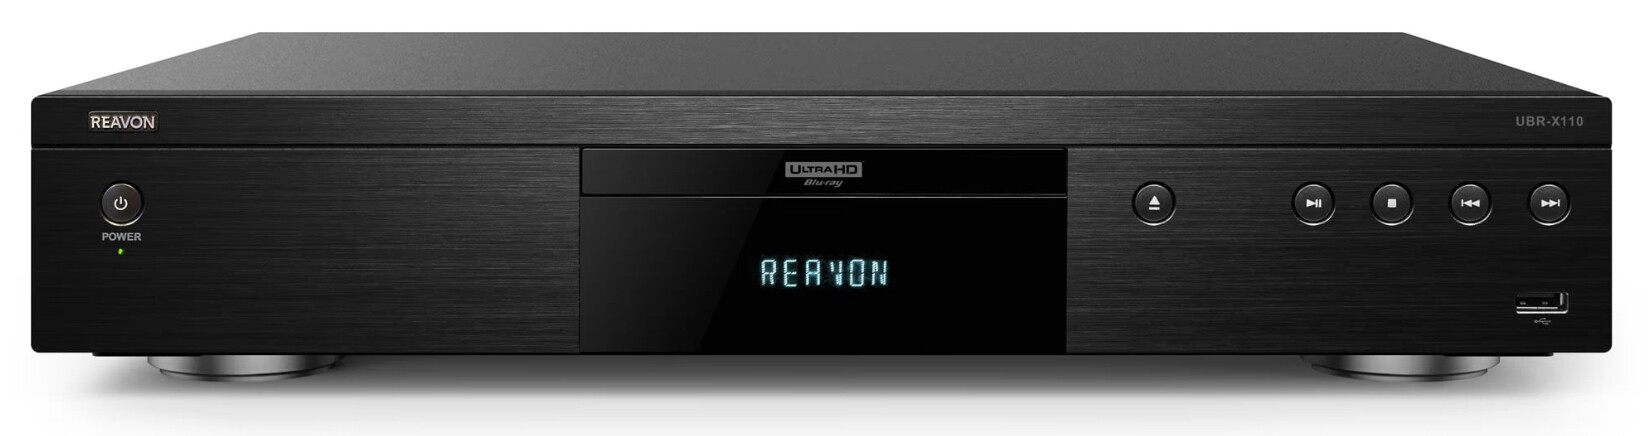 REAVON-UBR-X110-Dolby-Vision-4K-ULTRA-HD-SACD-Blu-Ray-Player-Demoware